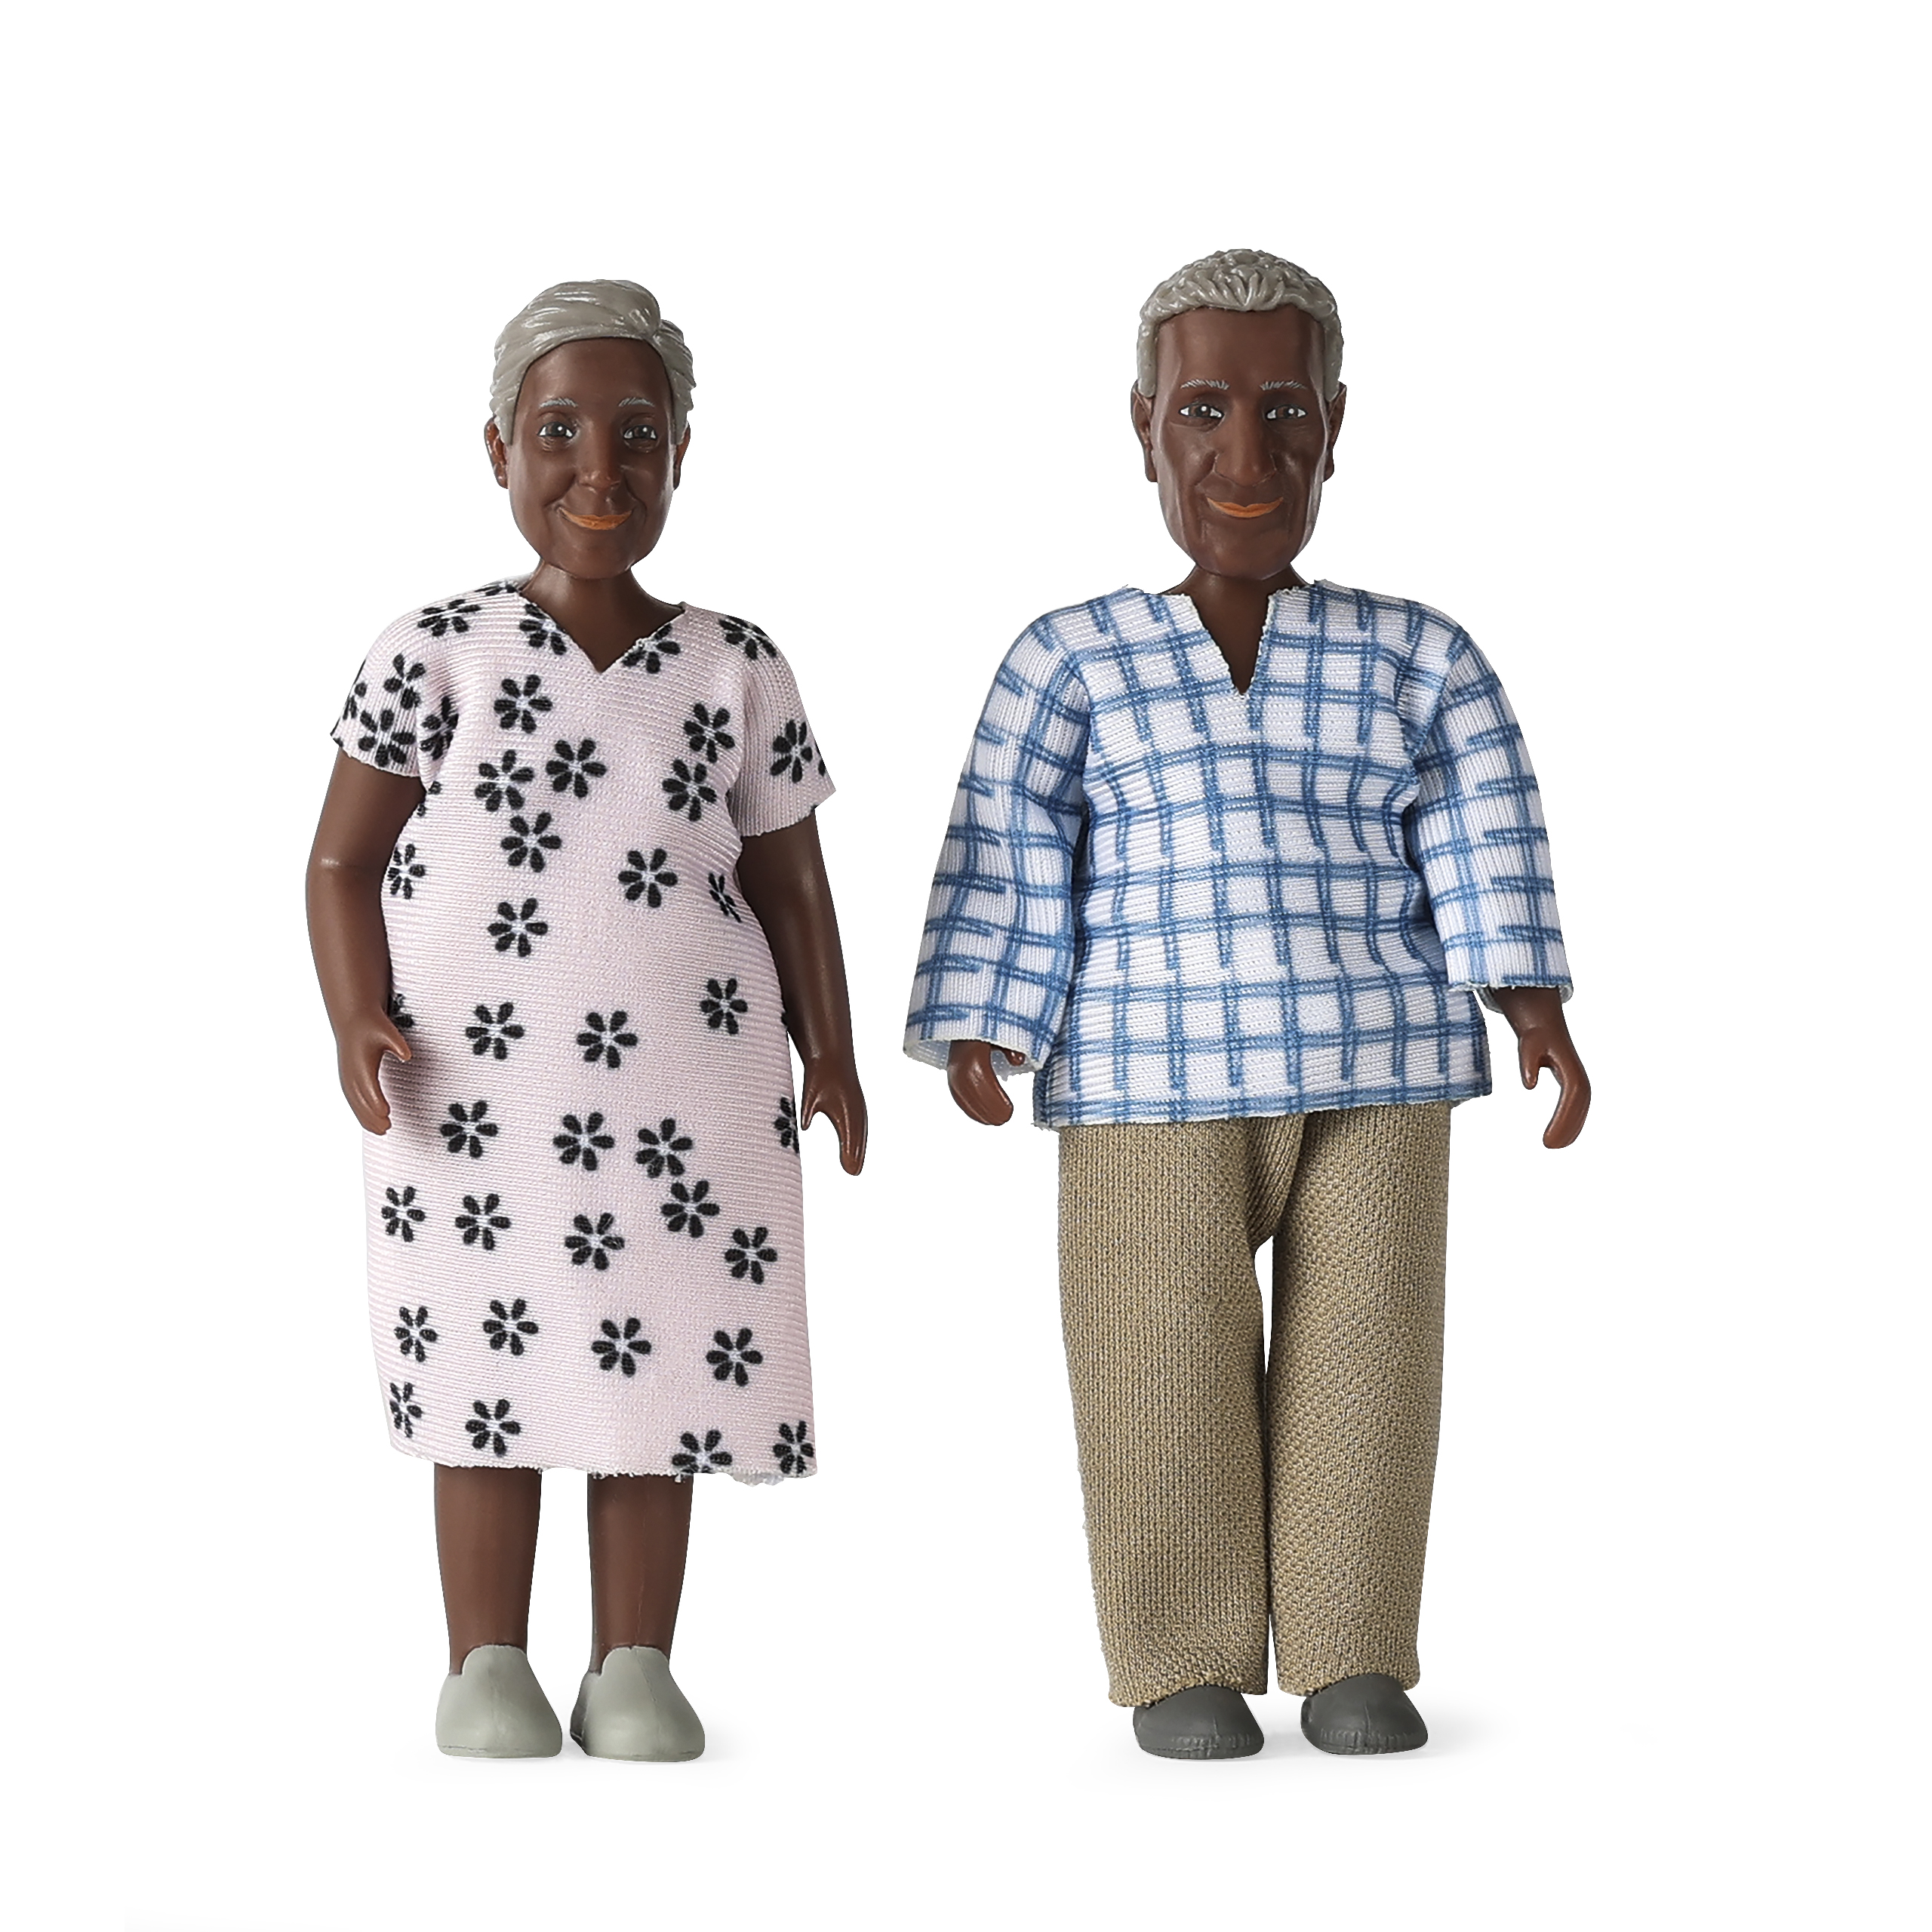 Lundby lundby	dollshouse dolls elderly couple billie